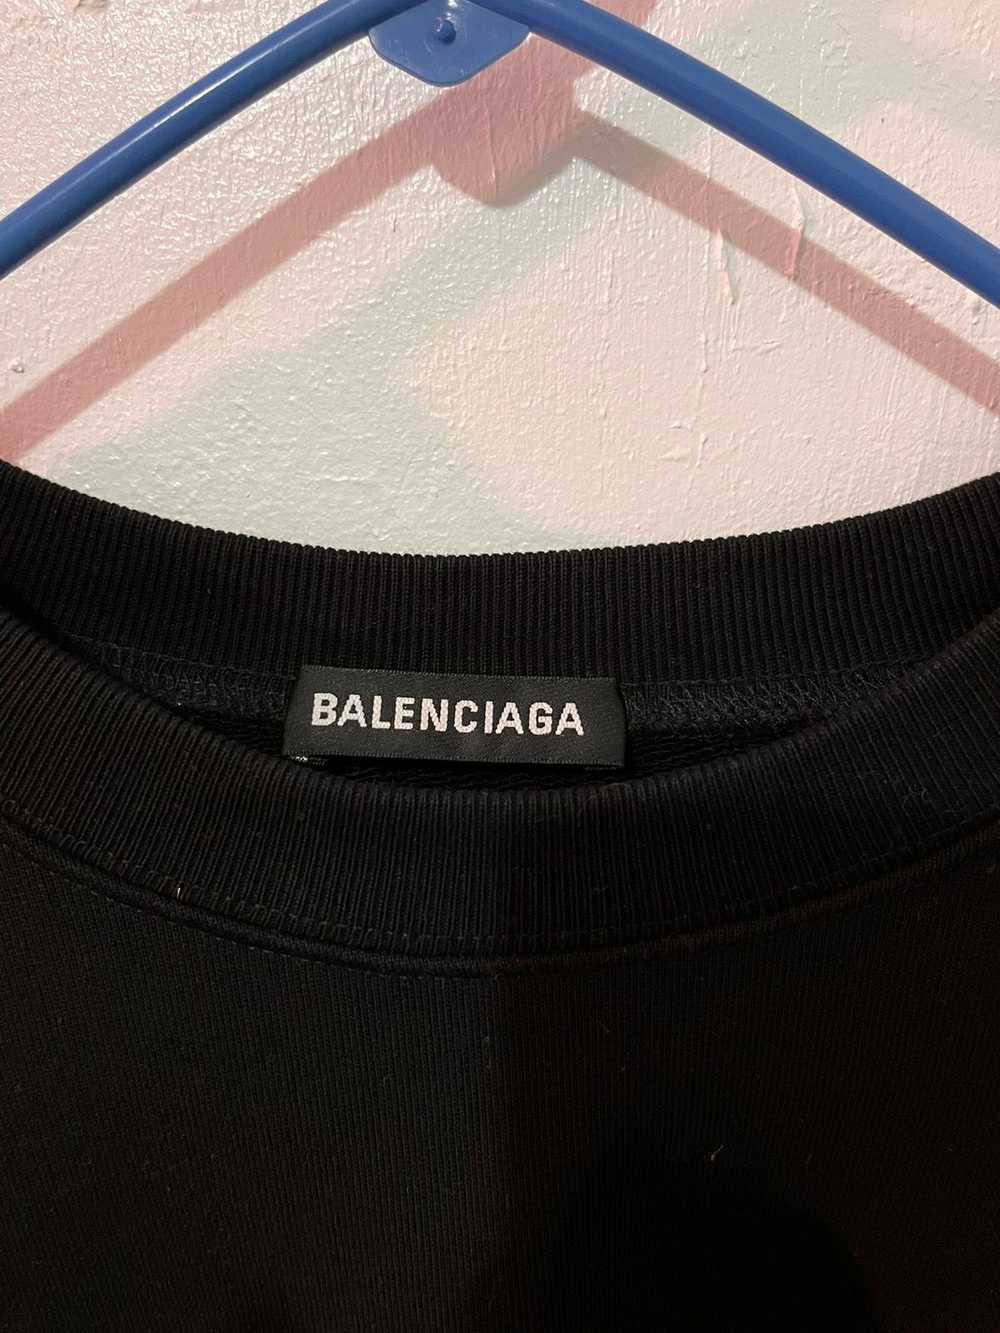 Balenciaga 2019 Crew Neck Sweatshirt - image 2